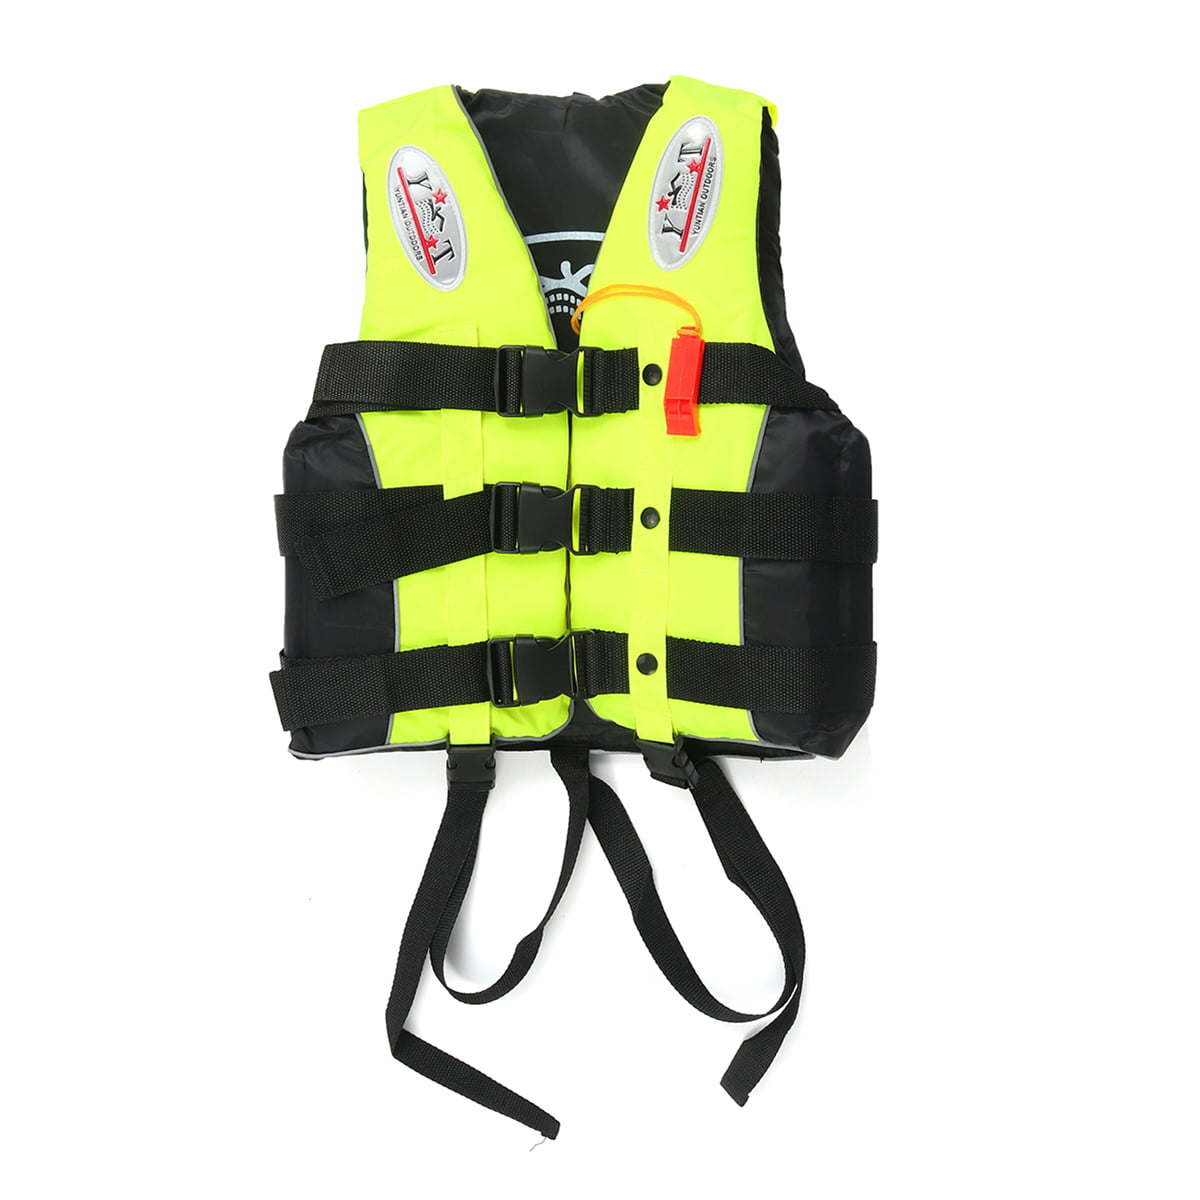 Adult Adjustable Life Jacket Survival Vest Swimming Boating Fishing Drift 